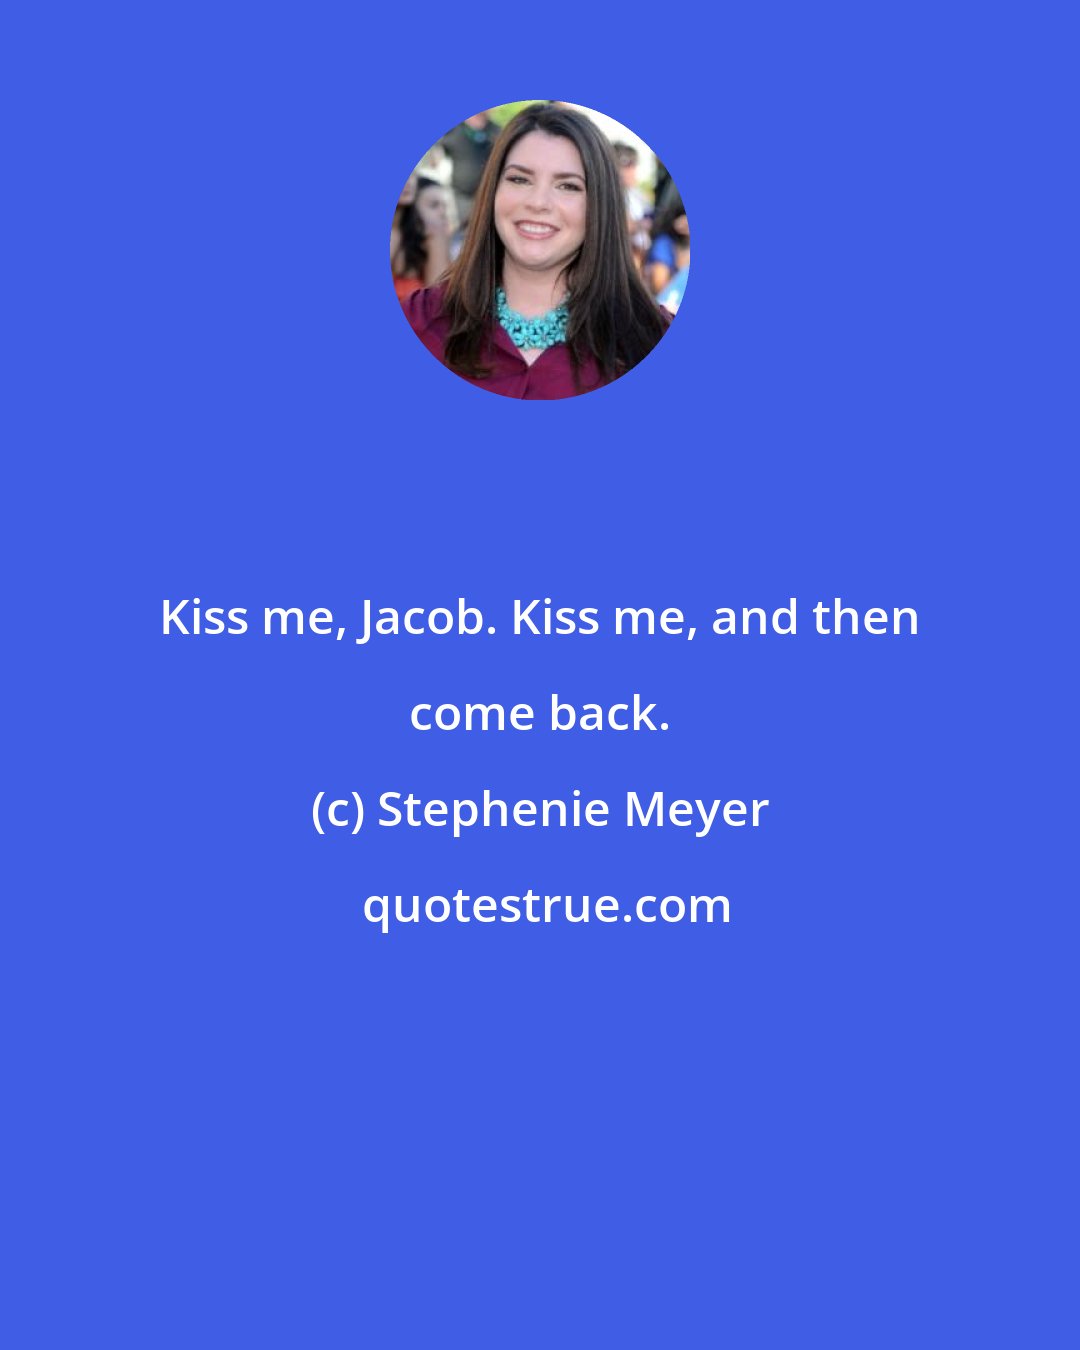 Stephenie Meyer: Kiss me, Jacob. Kiss me, and then come back.